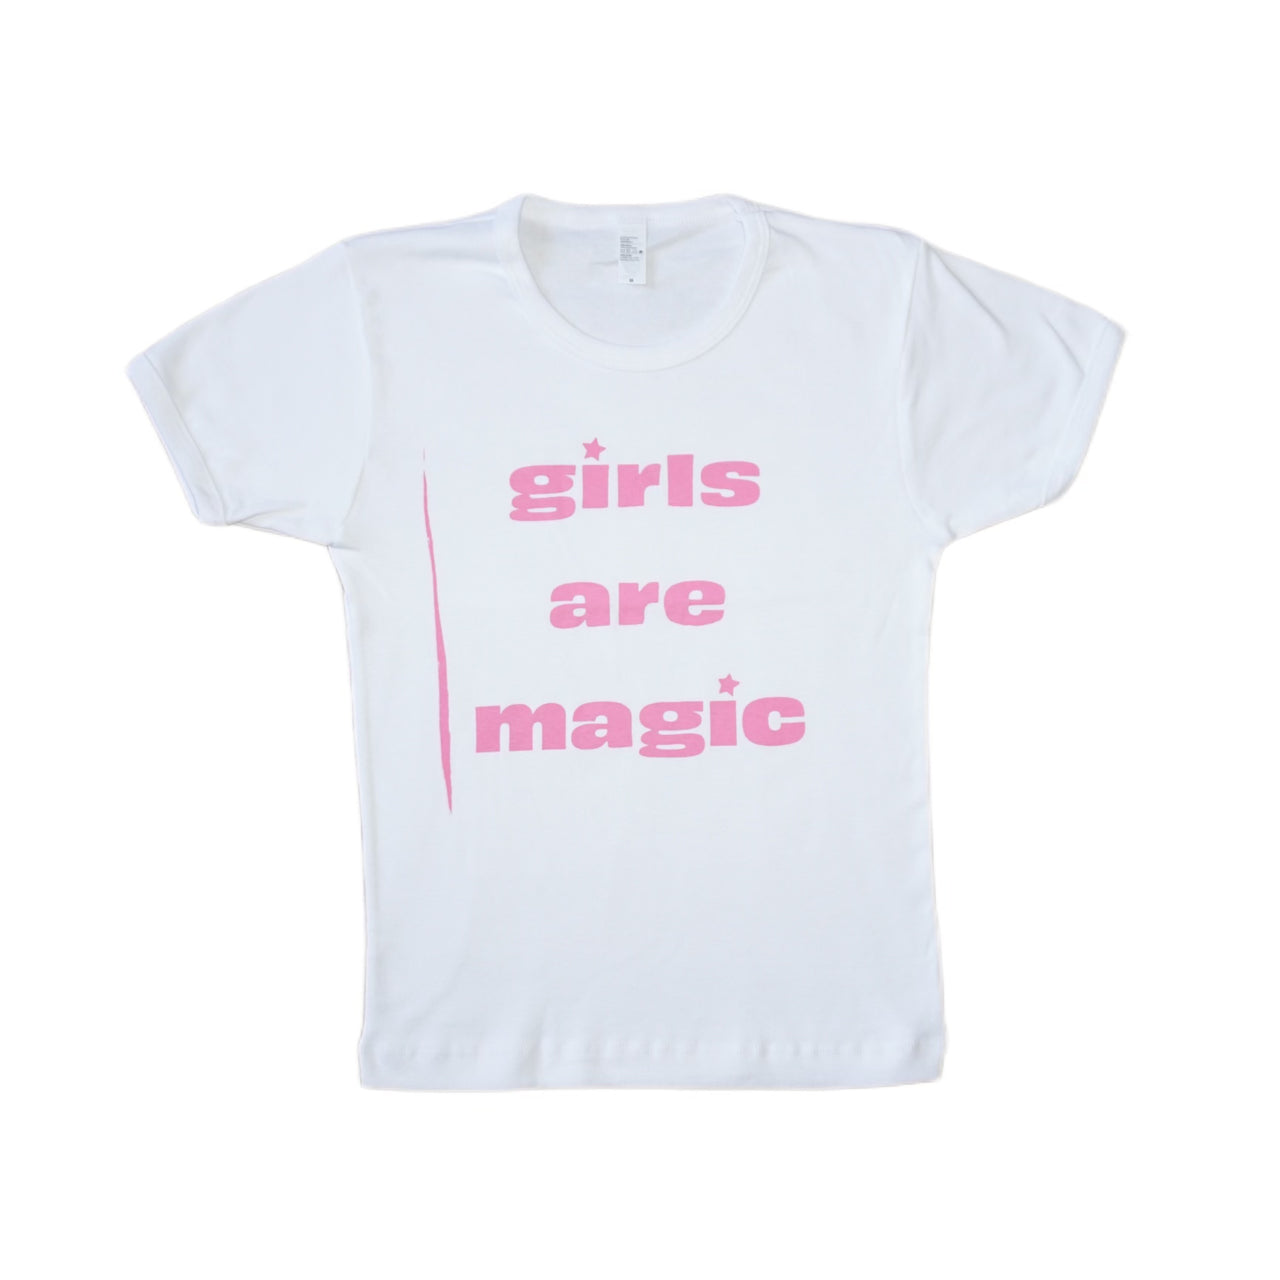 MISPRINT girls are magic baby tee